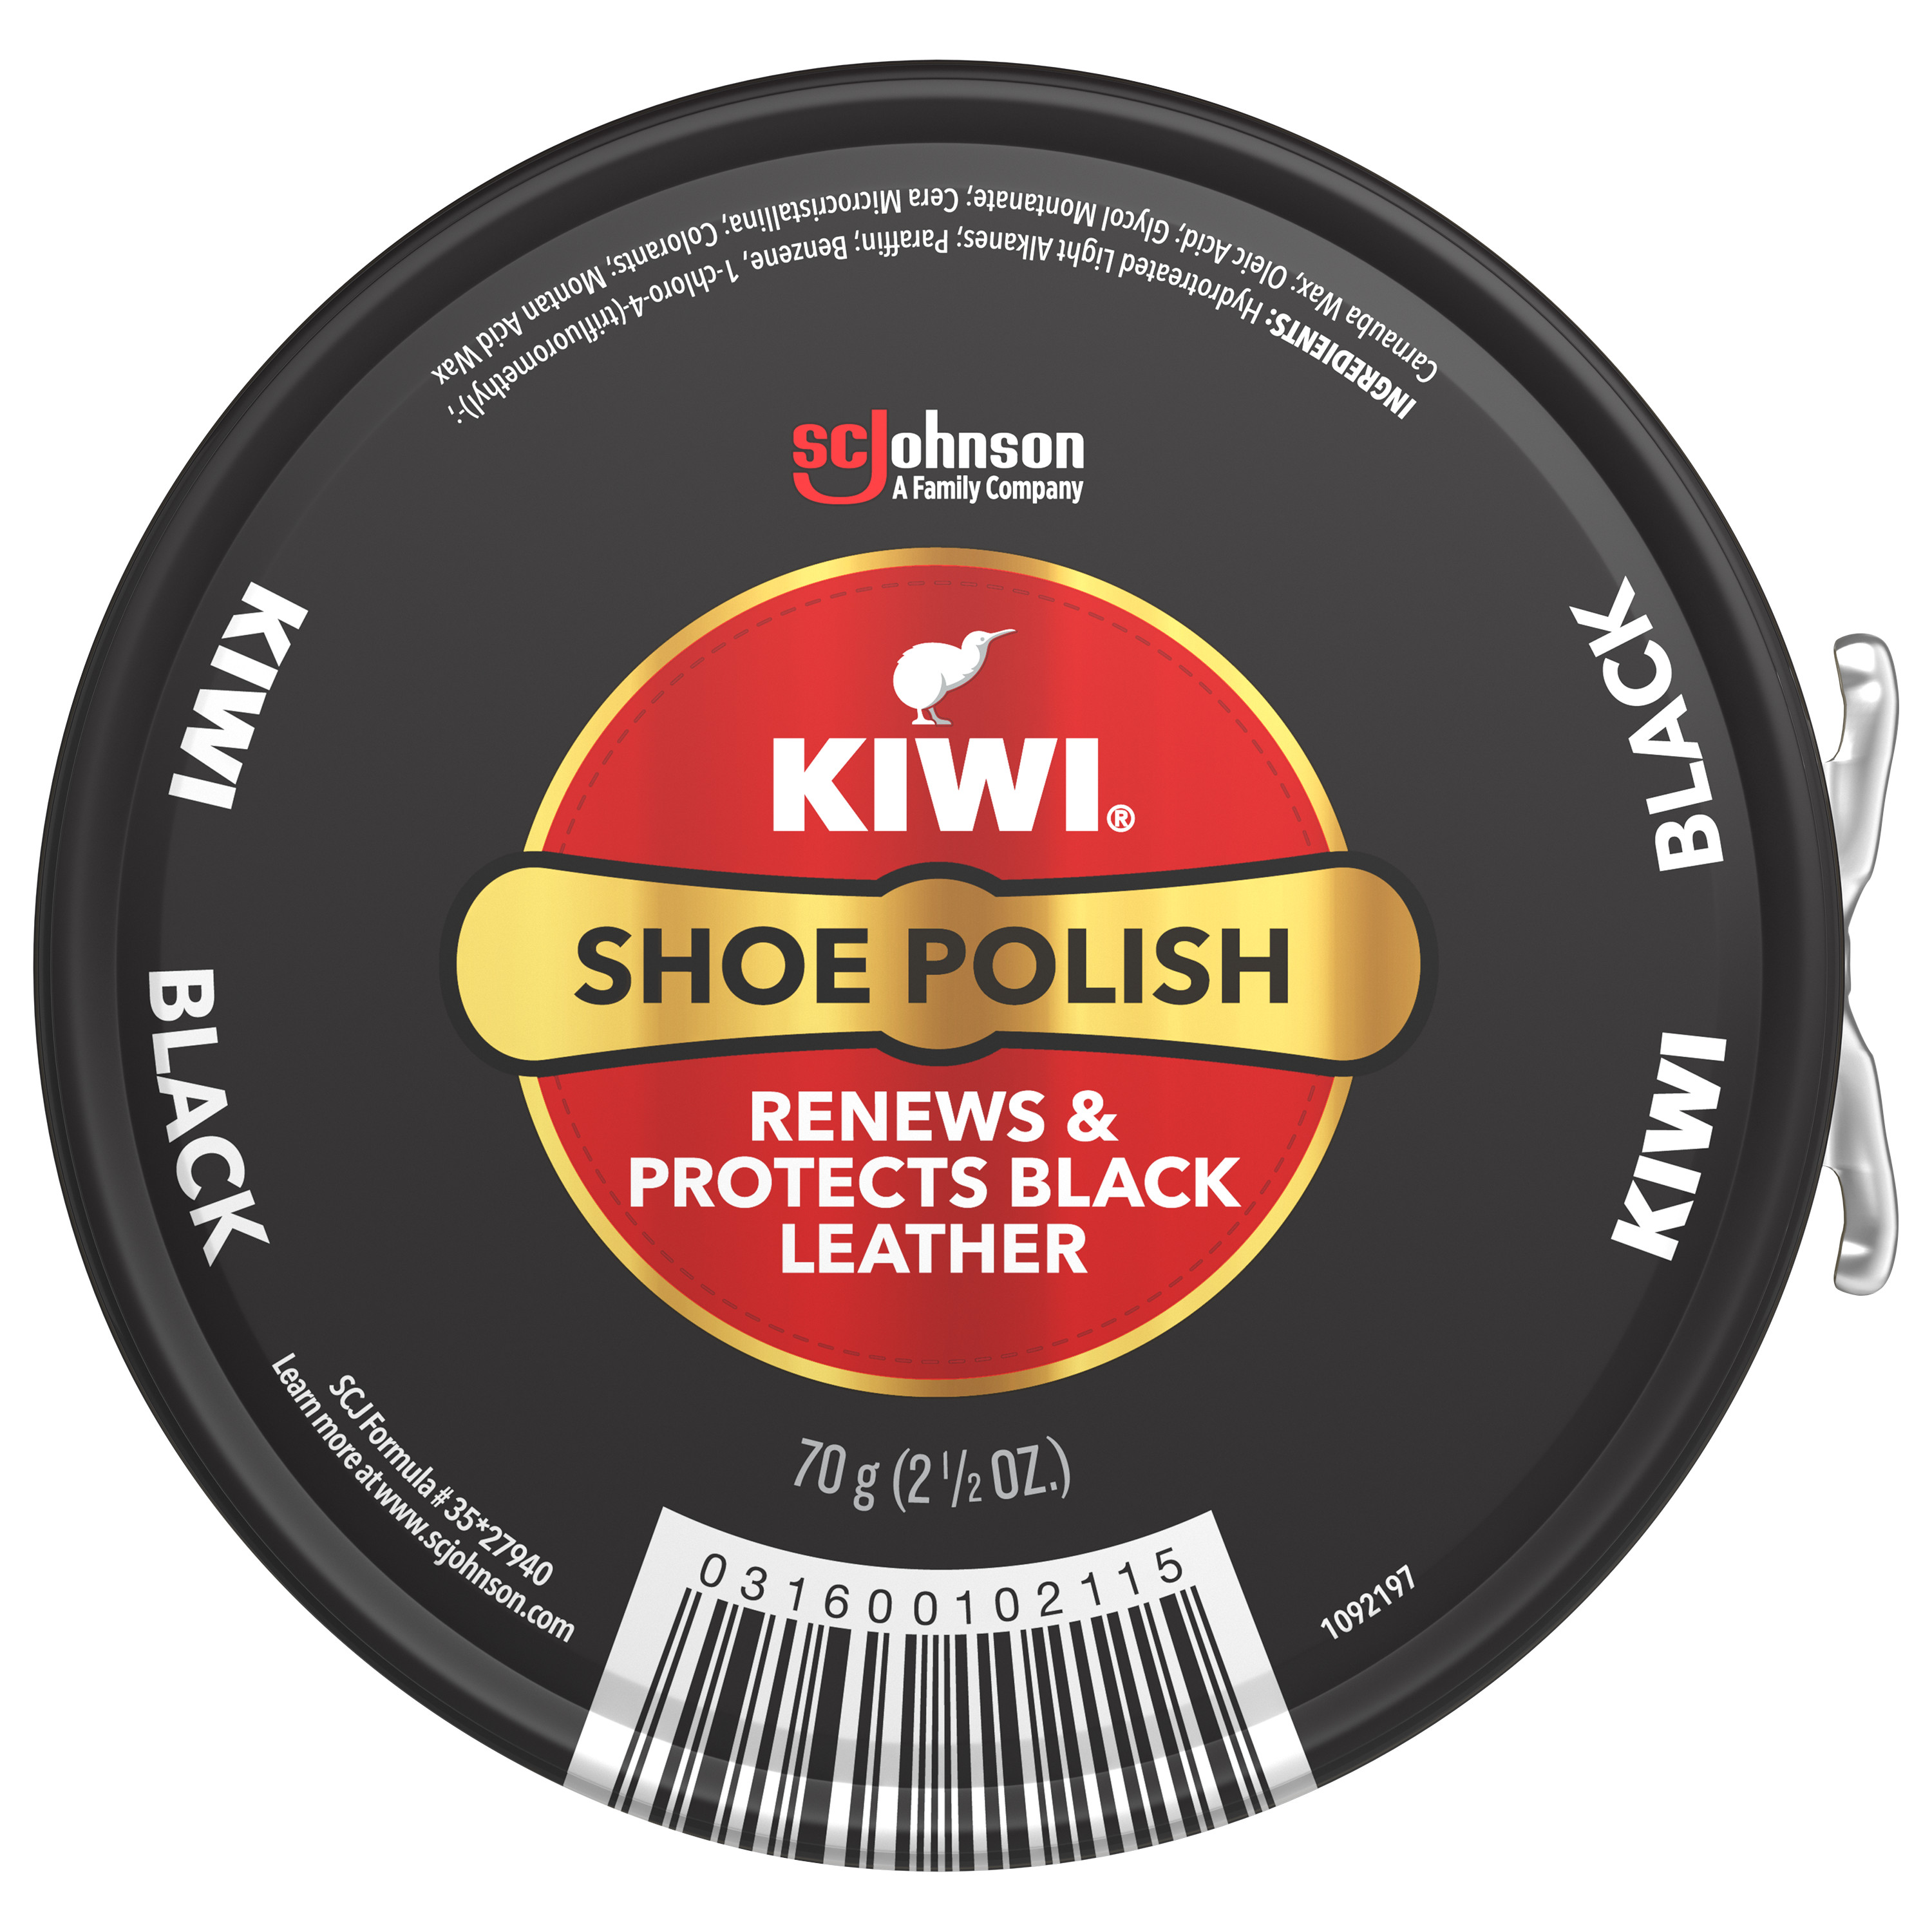 KIWI Shoe Polish, Black, 2.5 oz (1 Metal Tin) - image 1 of 9